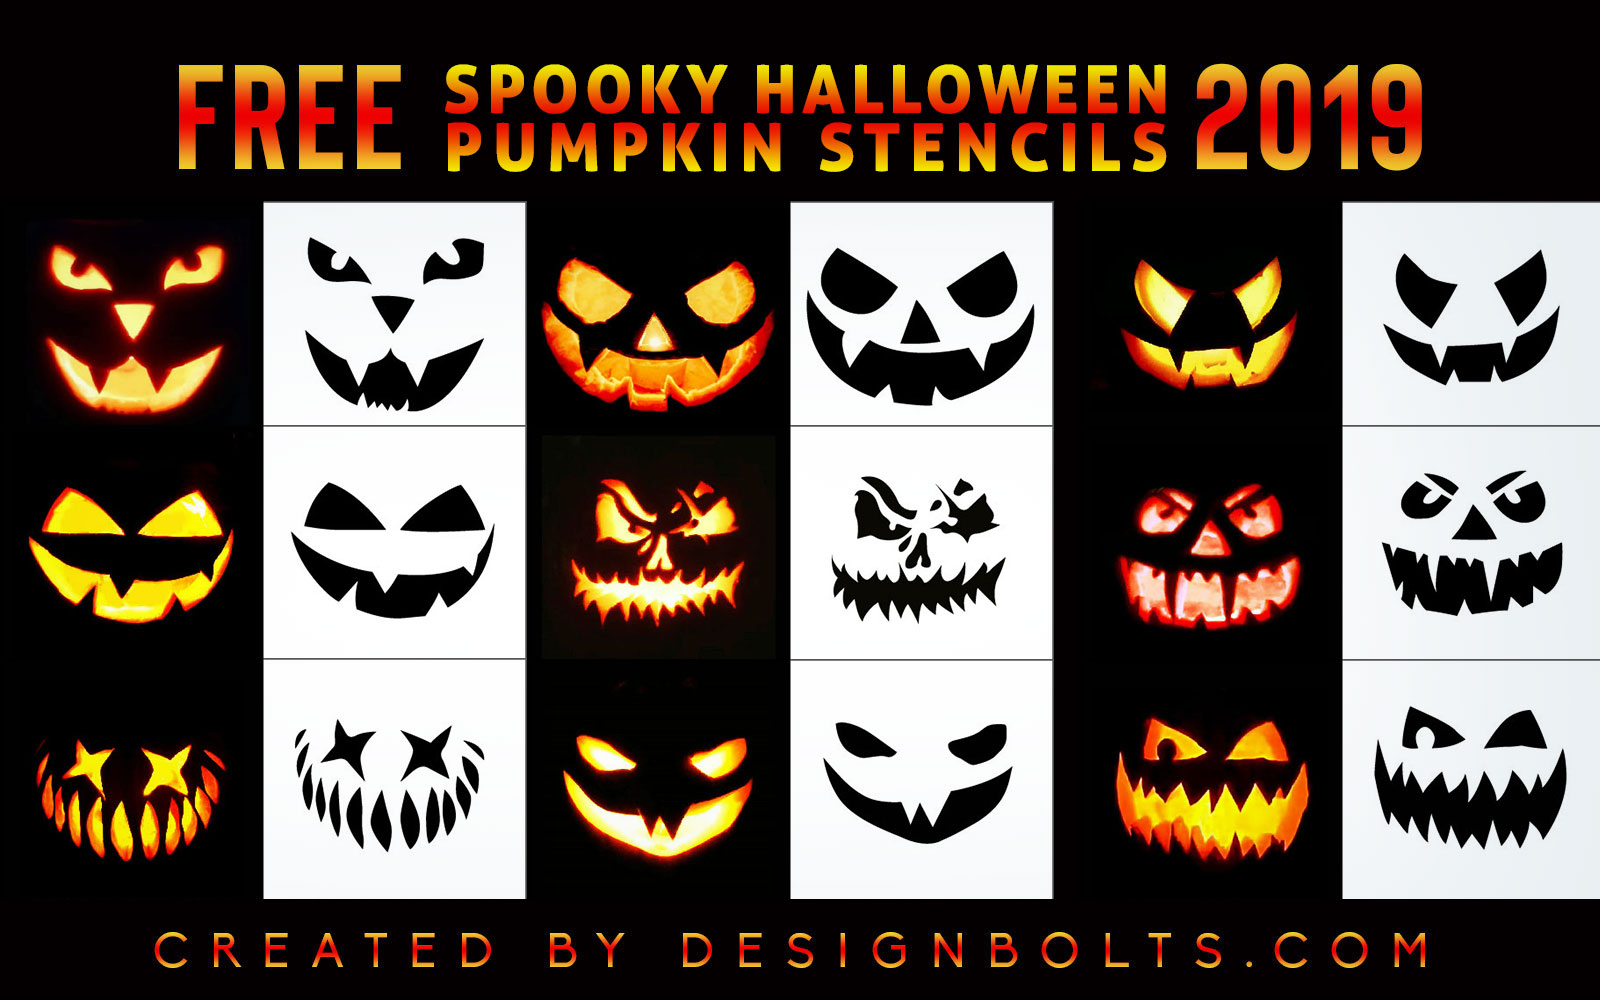 10 Free Spooky Yet Scary Halloween Pumpkin Carving Stencils Patterns Ideas 2019 Designbolts - brawl stars pumpkin stencils